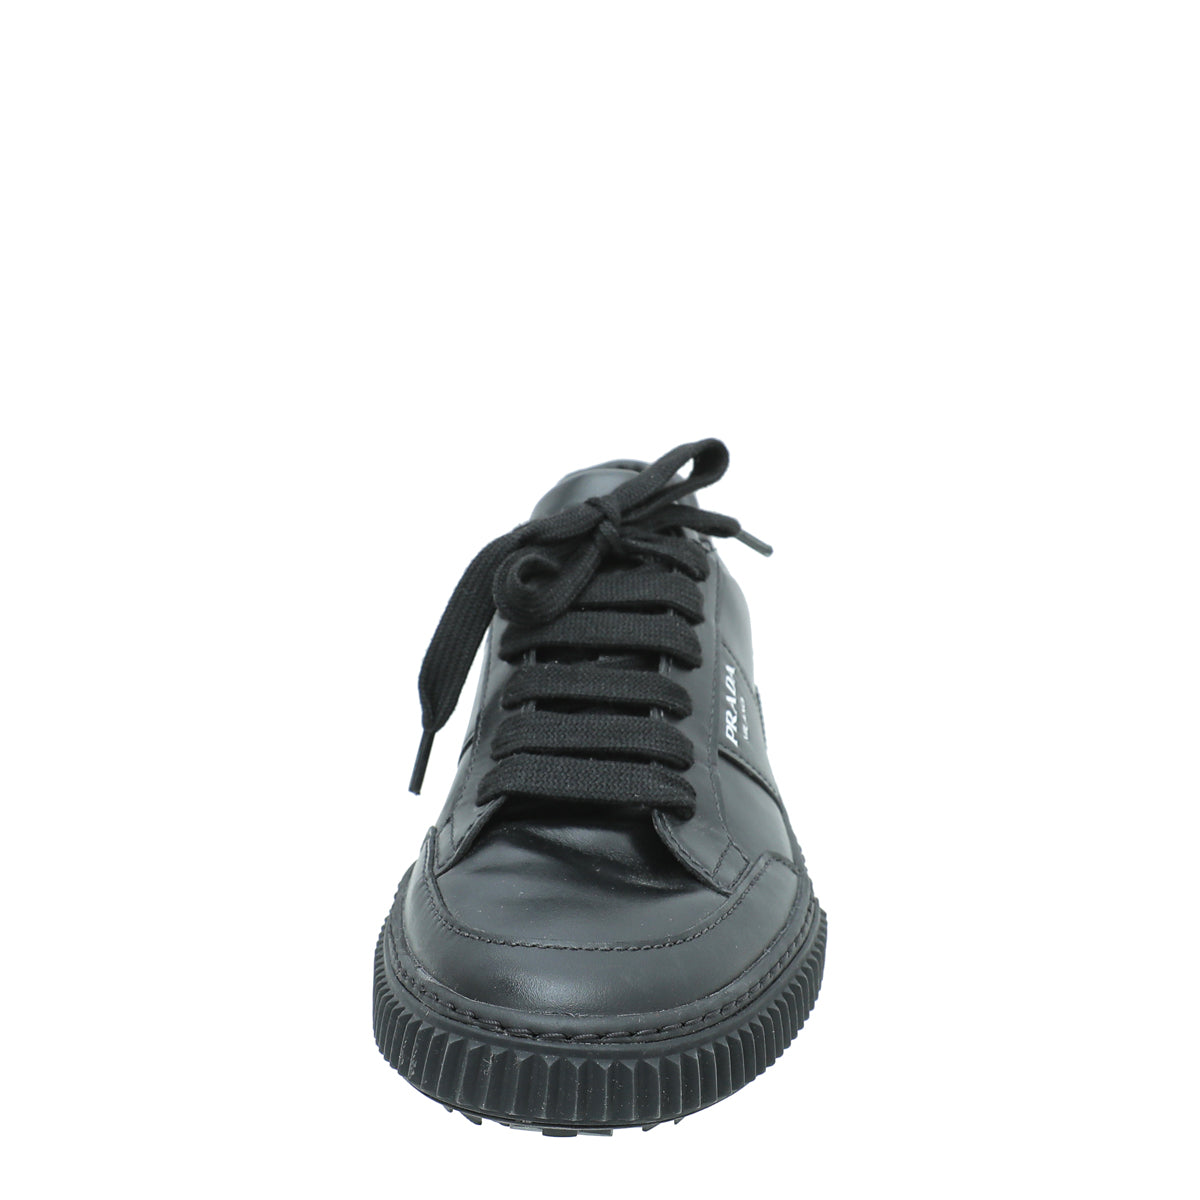 Prada Black Lace Up Sneakers 6